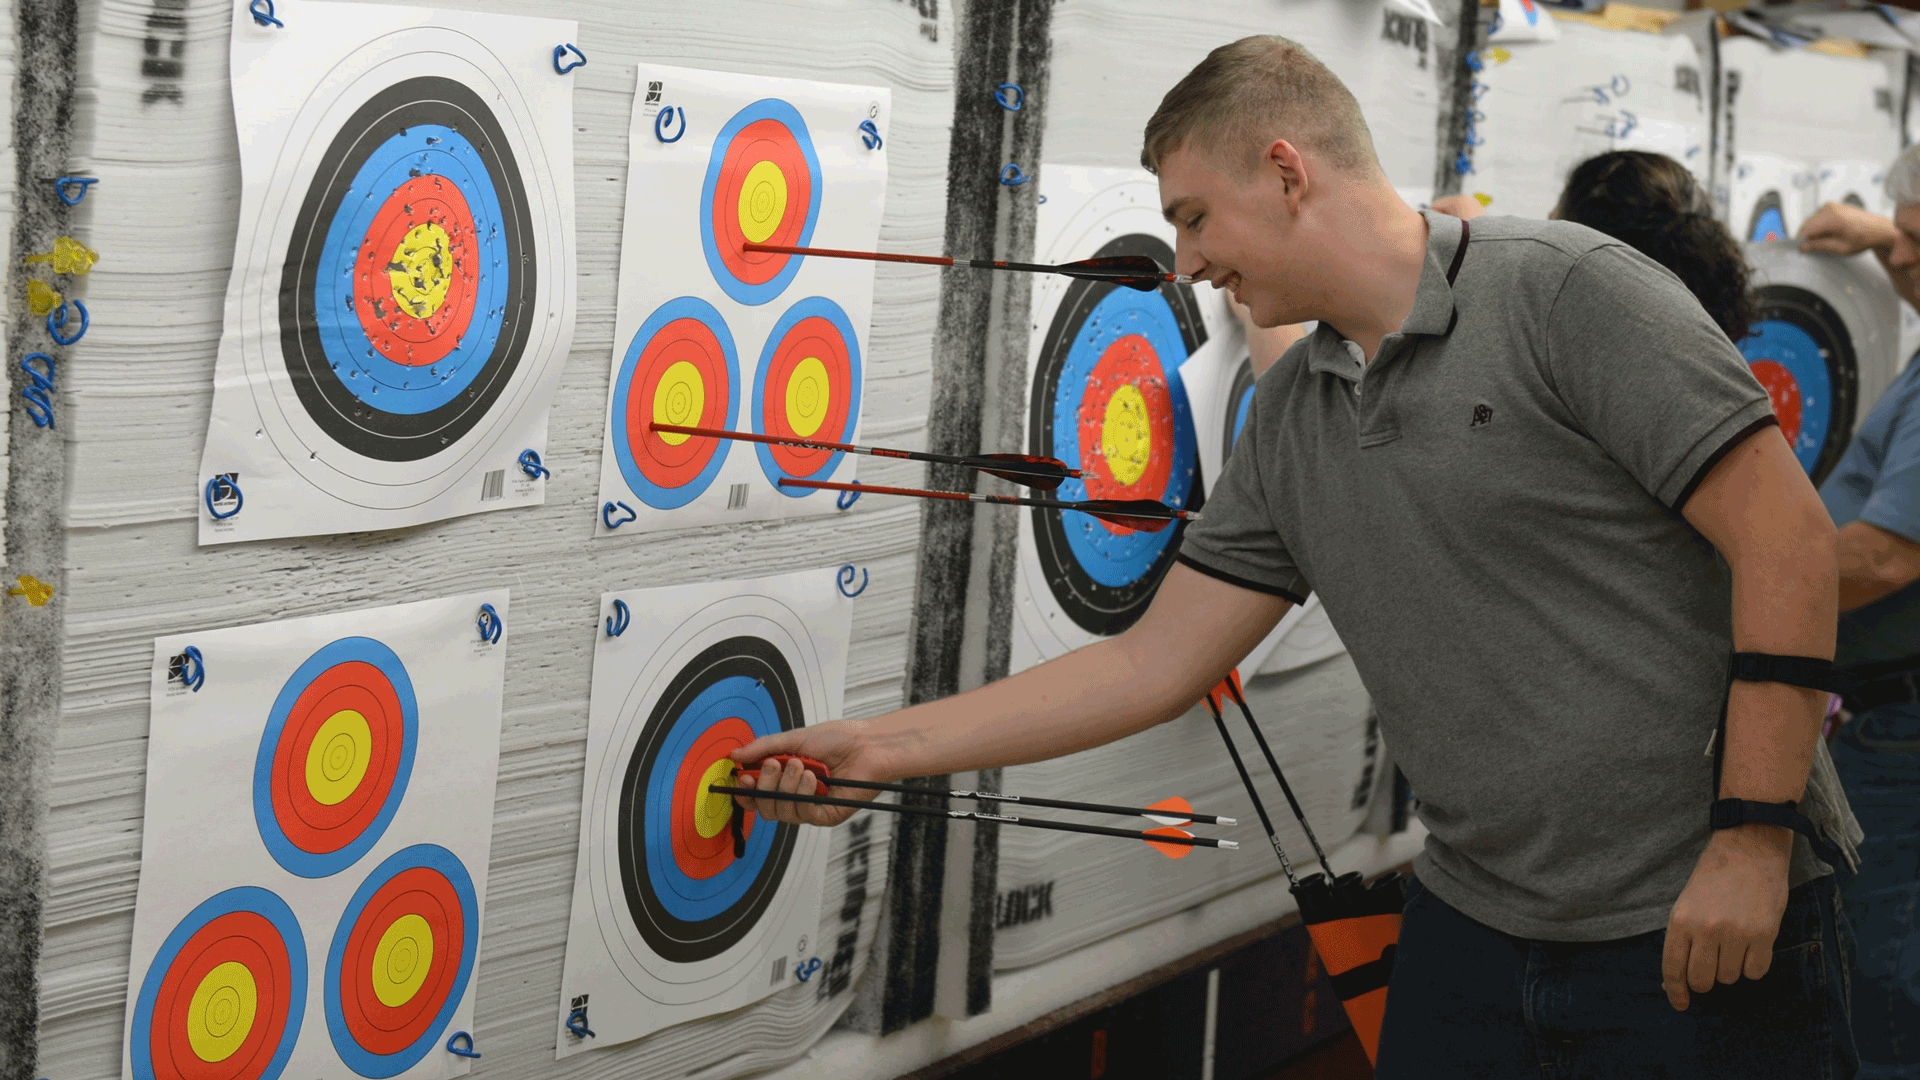 Archery Target Scoring Points